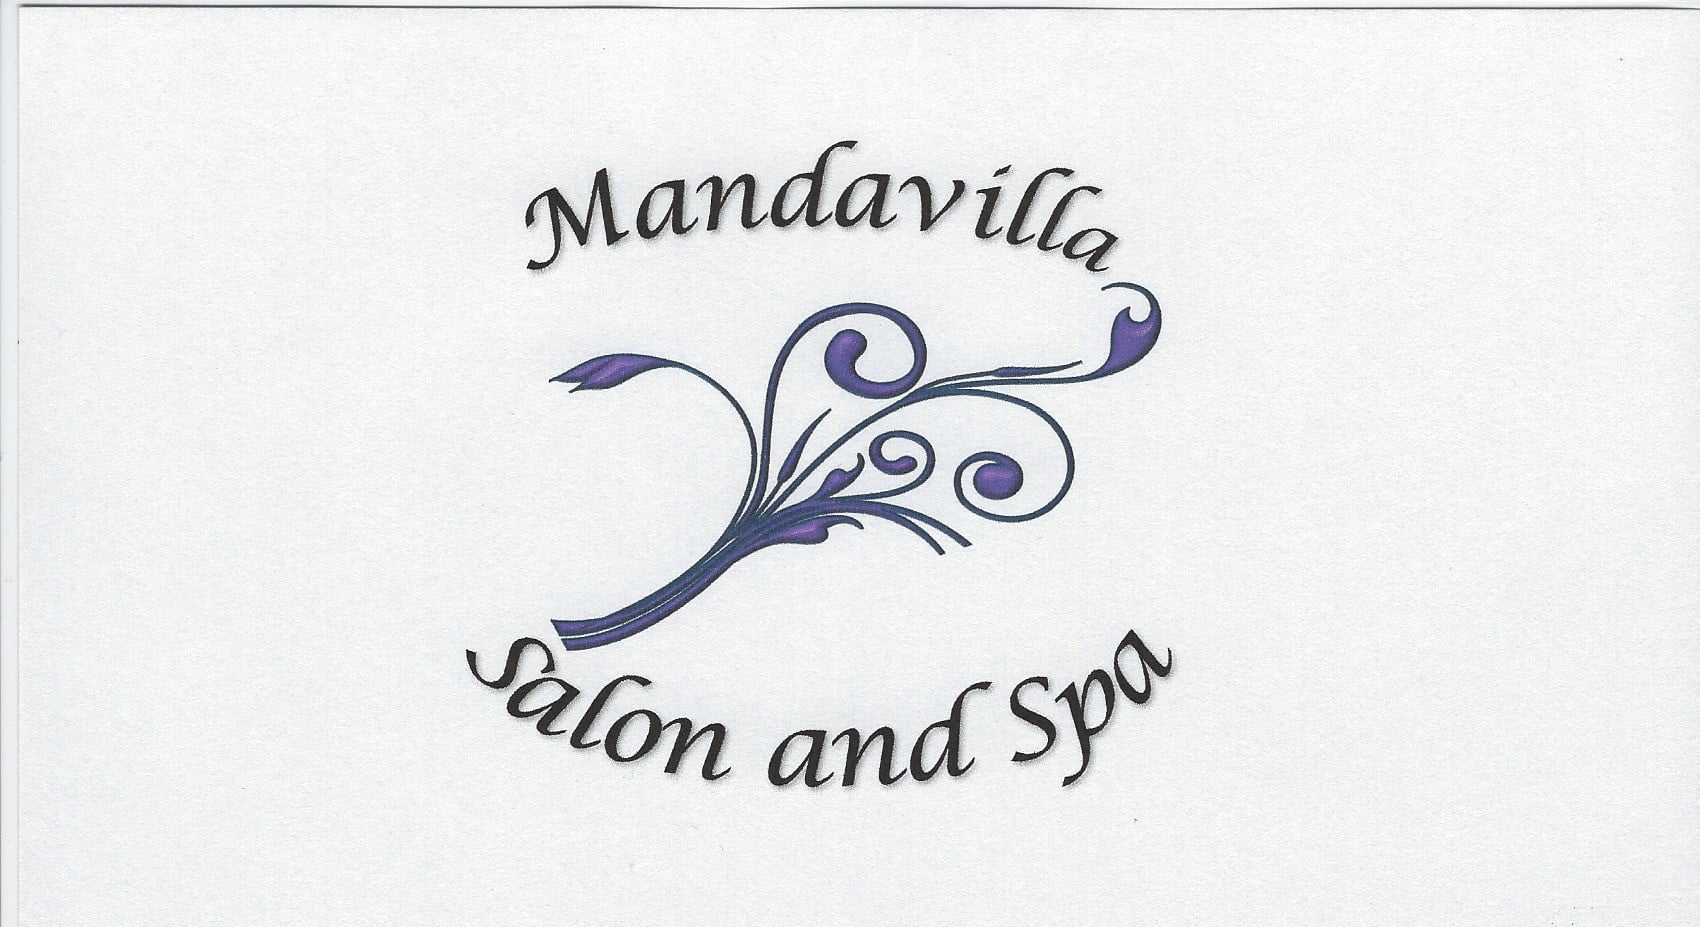 Mandavilla Salon & Spa 200 N Baltimore St, Dillsburg Pennsylvania 17019